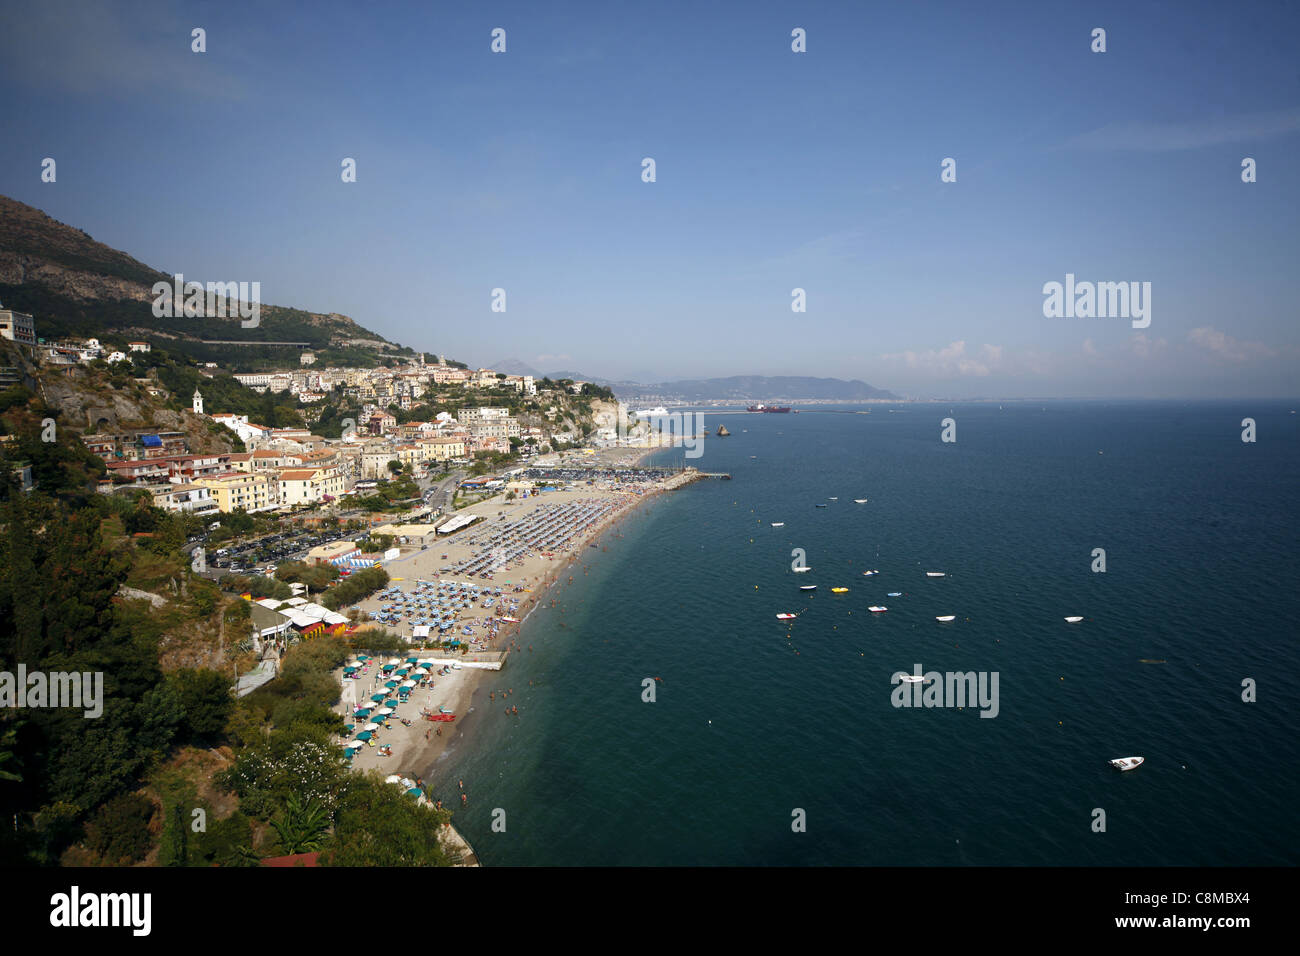 Marina di vietri beach hi-res stock photography and images - Alamy